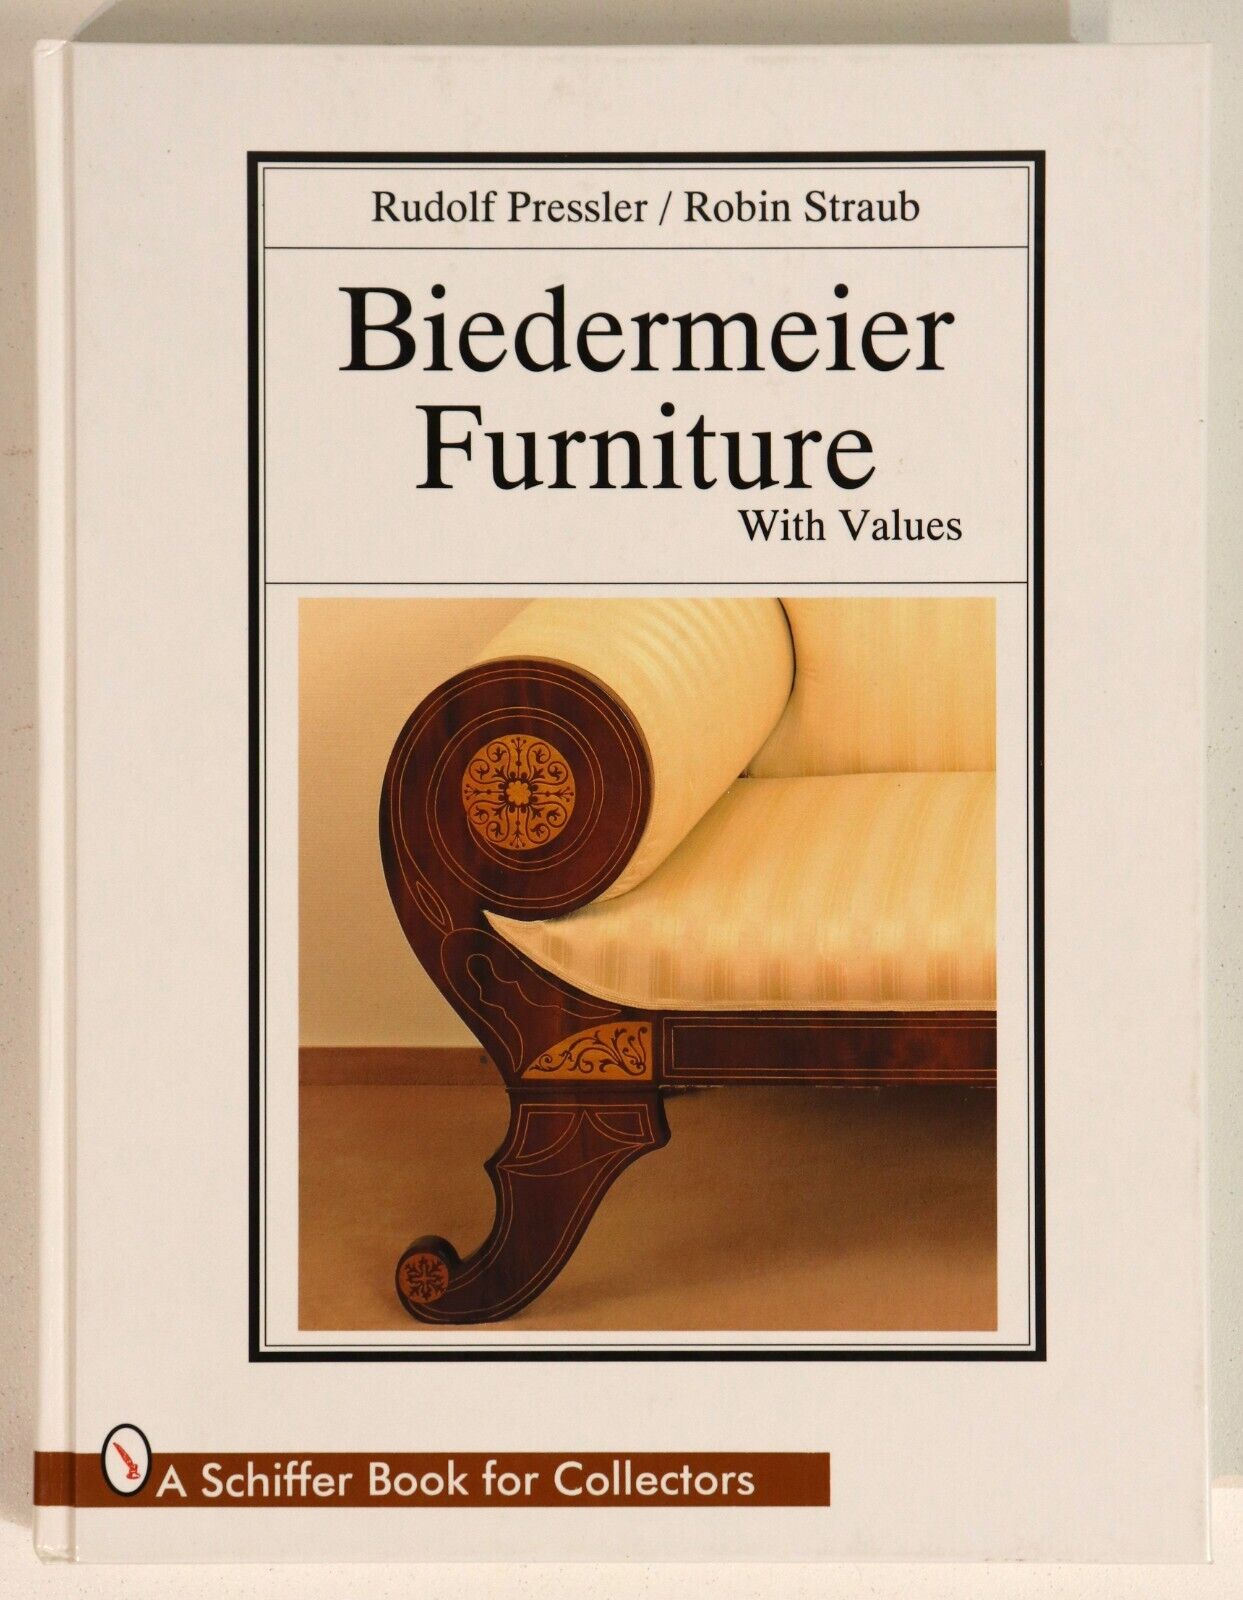 Biedermeier Furniture - 1996 - Antique Furniture Reference Book